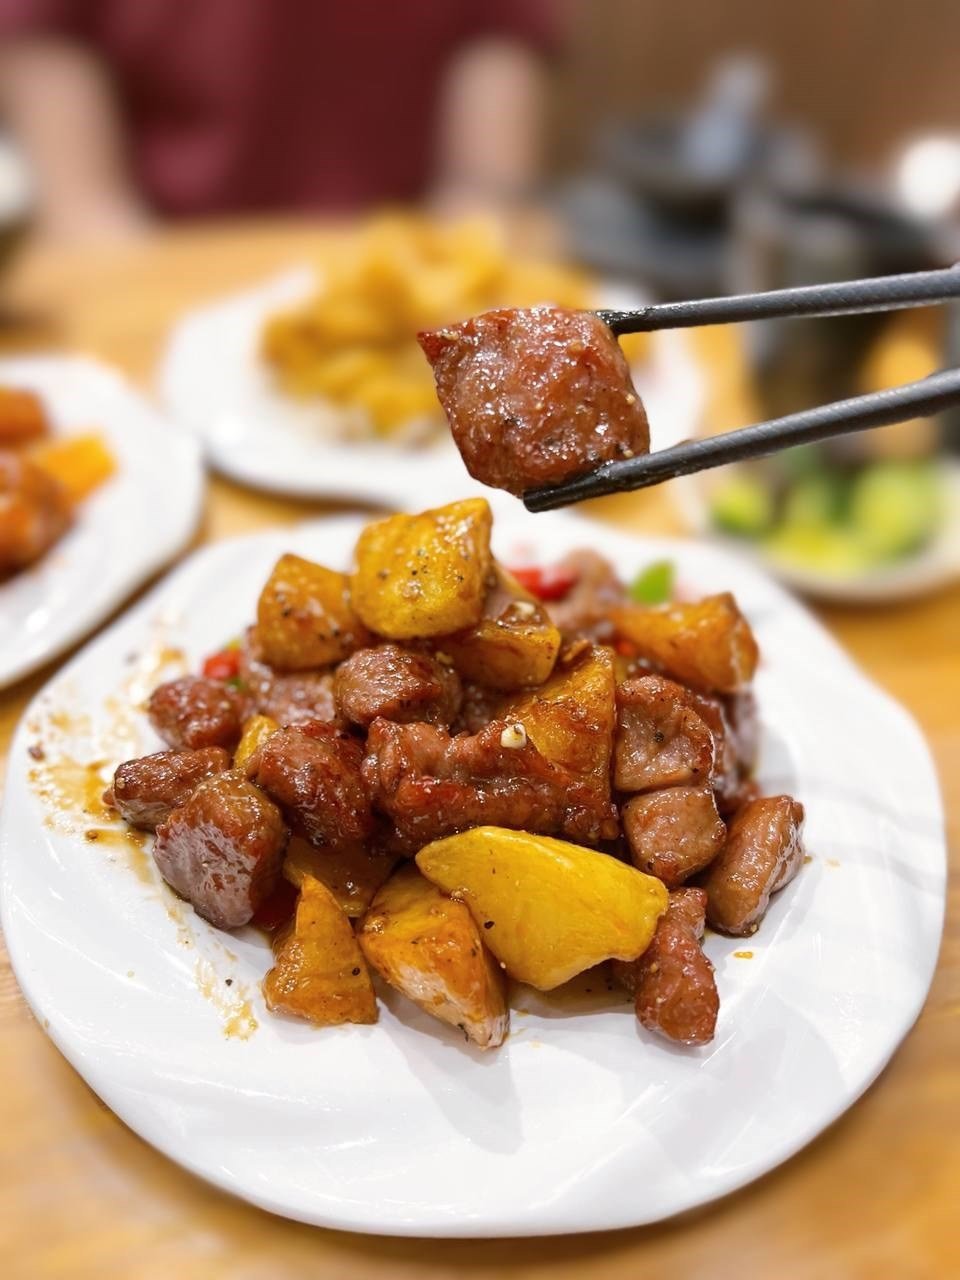 Black Pepper Beef & Potatoes (黑椒薯仔牛柳粒)